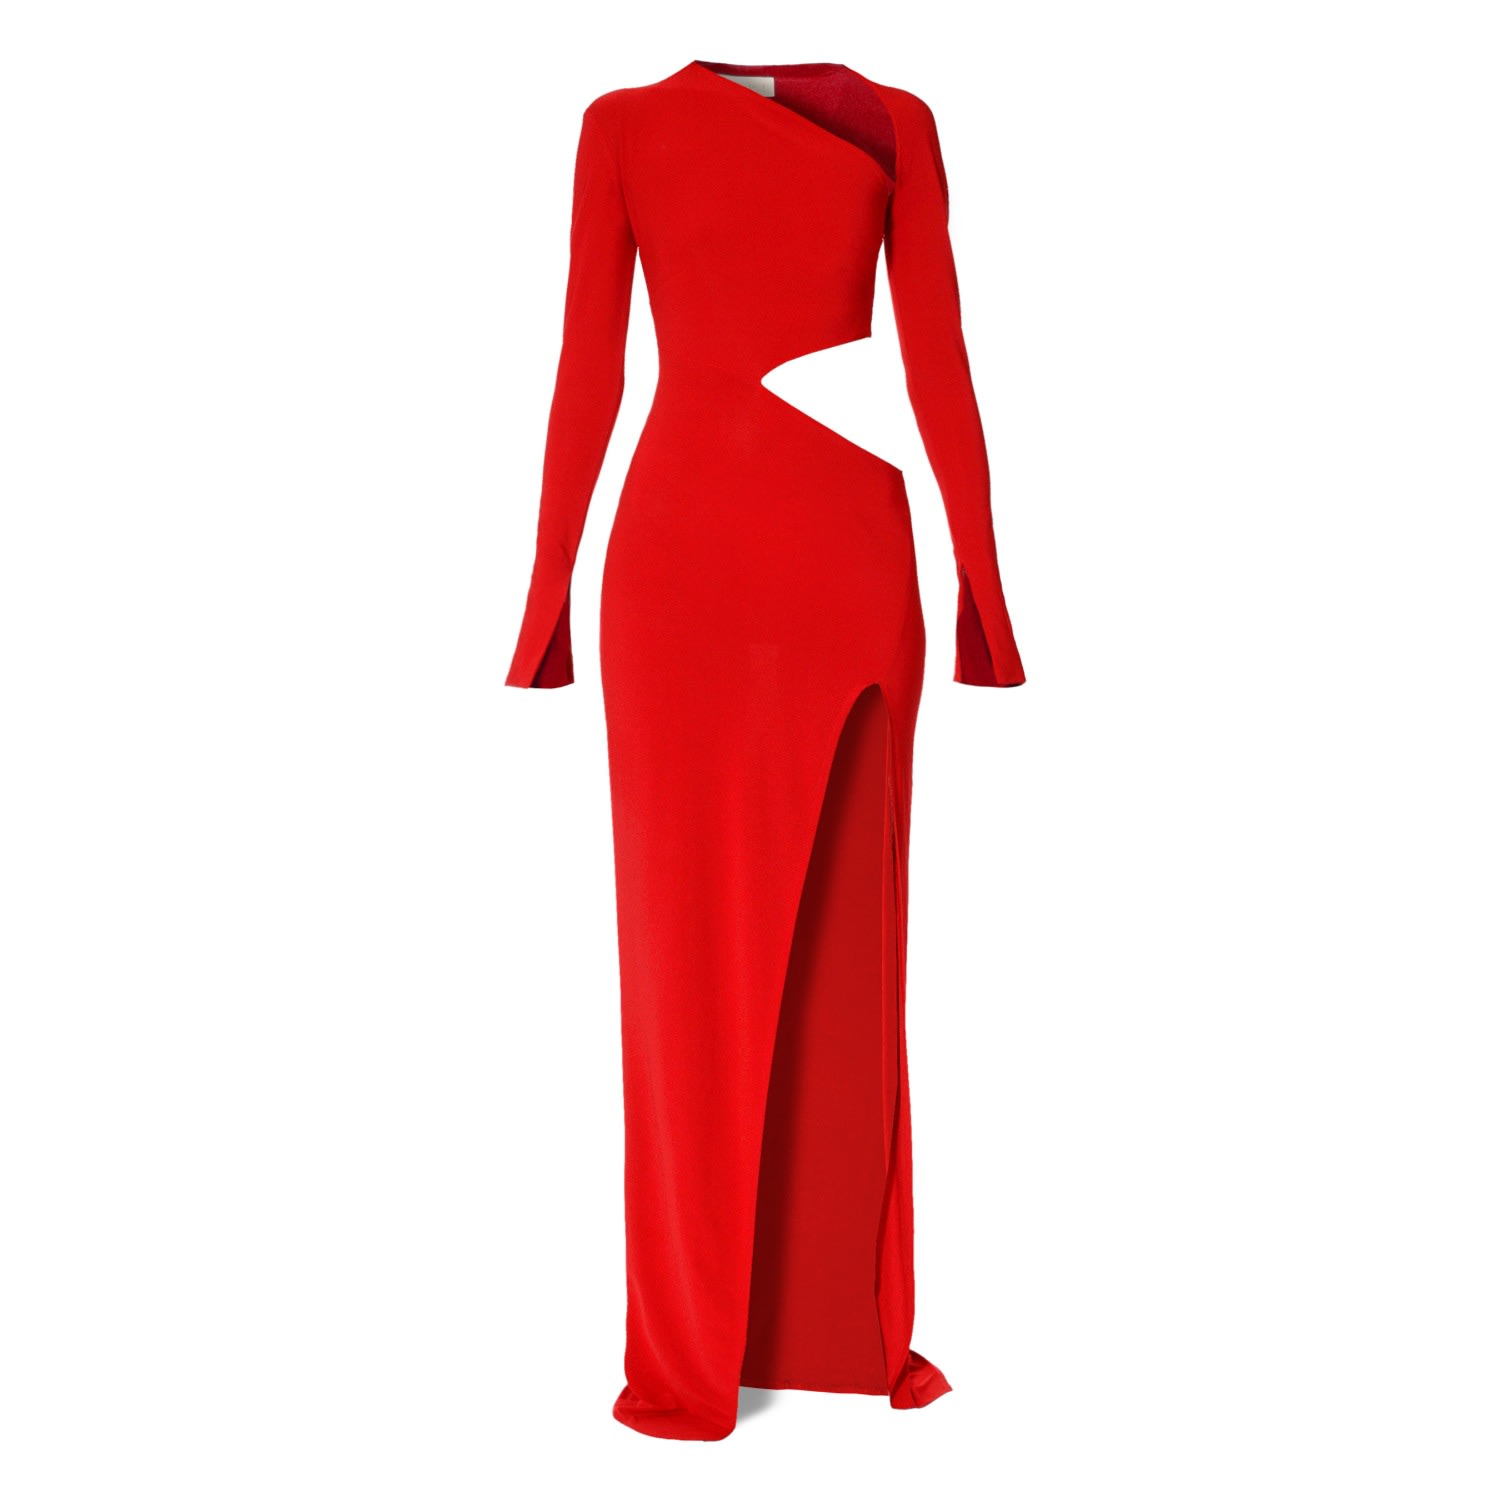 Shop Aggi Women's Skylar Million Dollar Red Dress